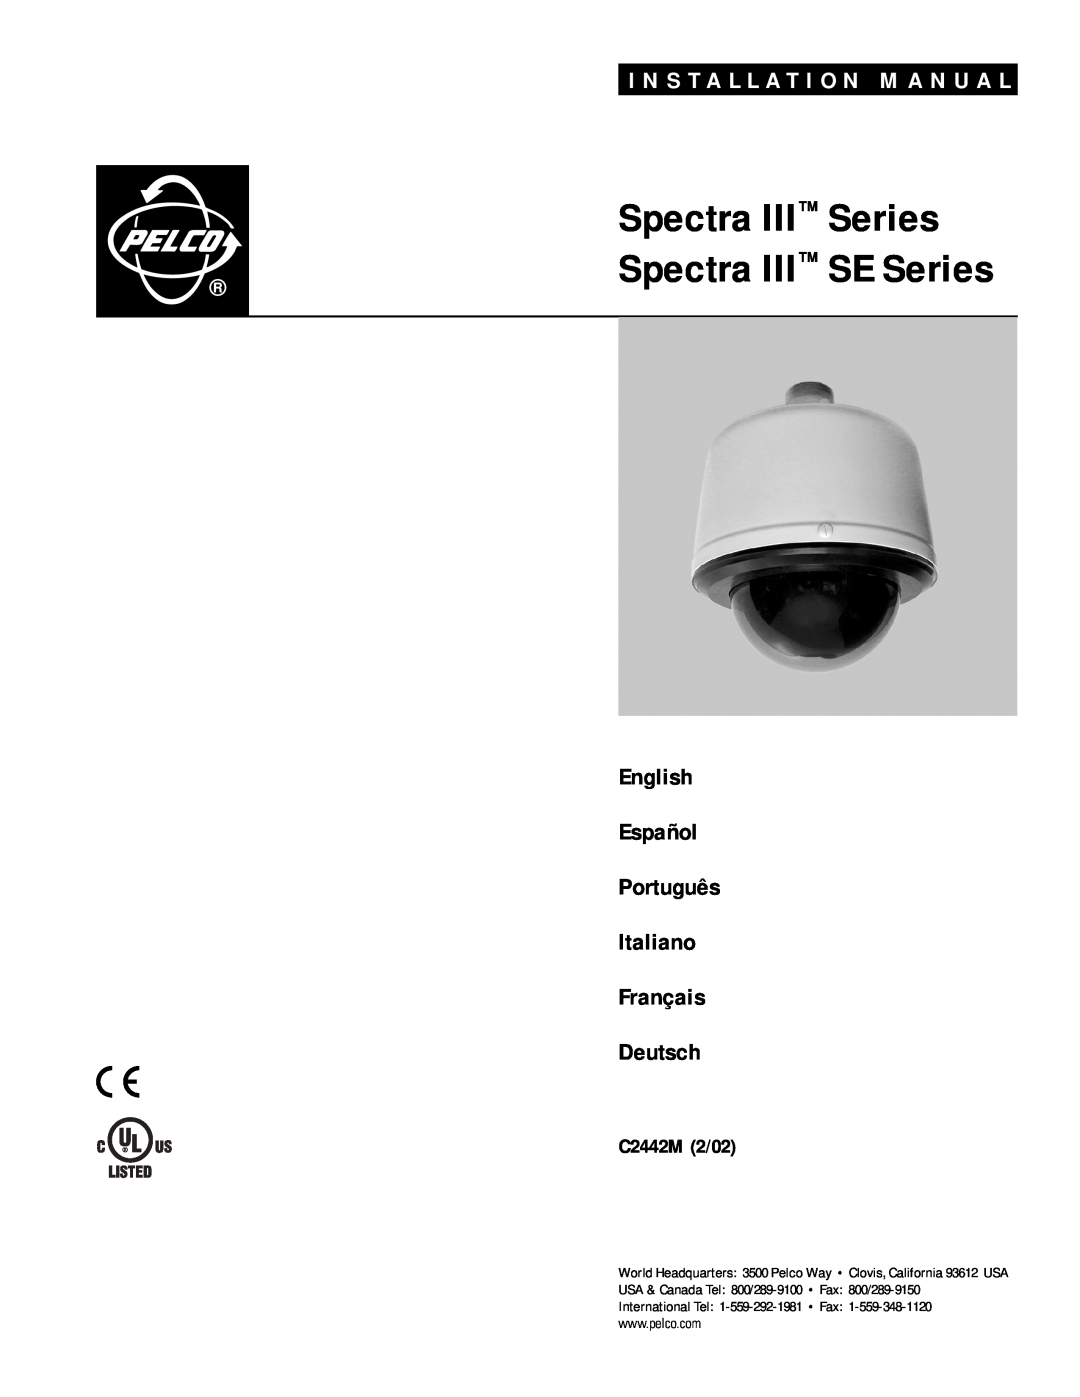 Pelco installation manual Spectra III Series Spectra III SE Series, I N S T A L L A T I O N M A N U A L, Deutsch 